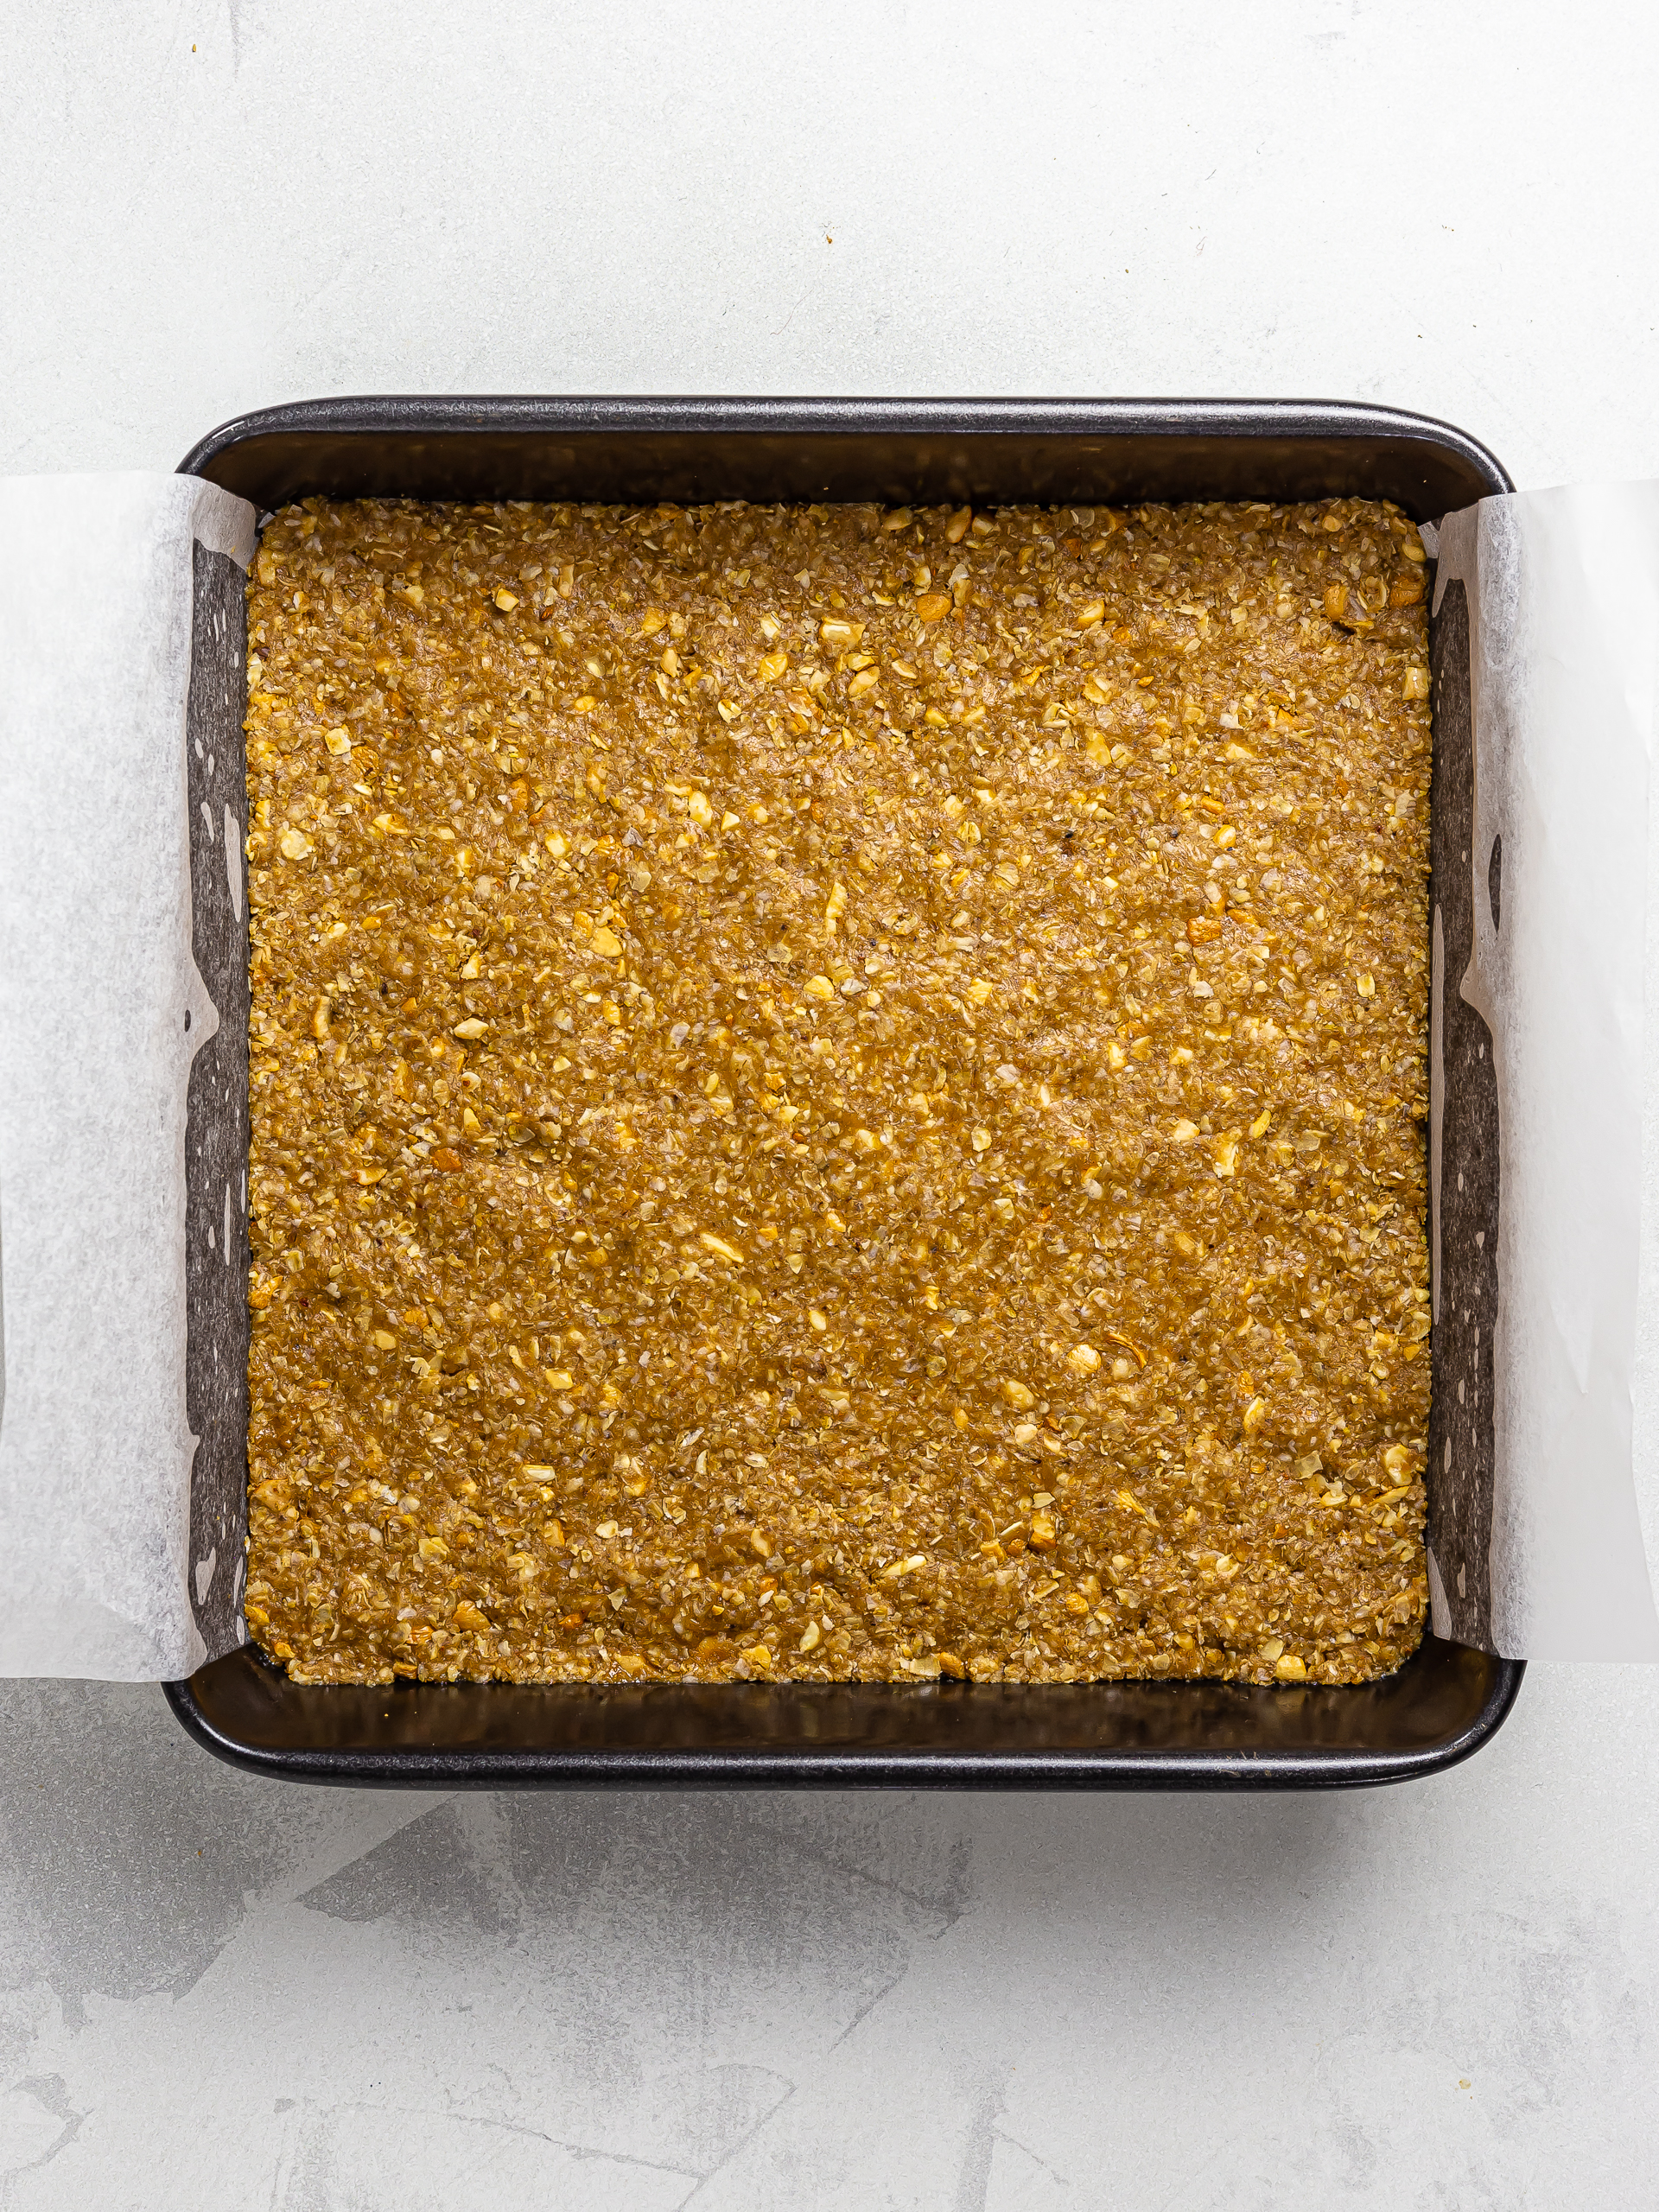 granola bar dough in a square tin